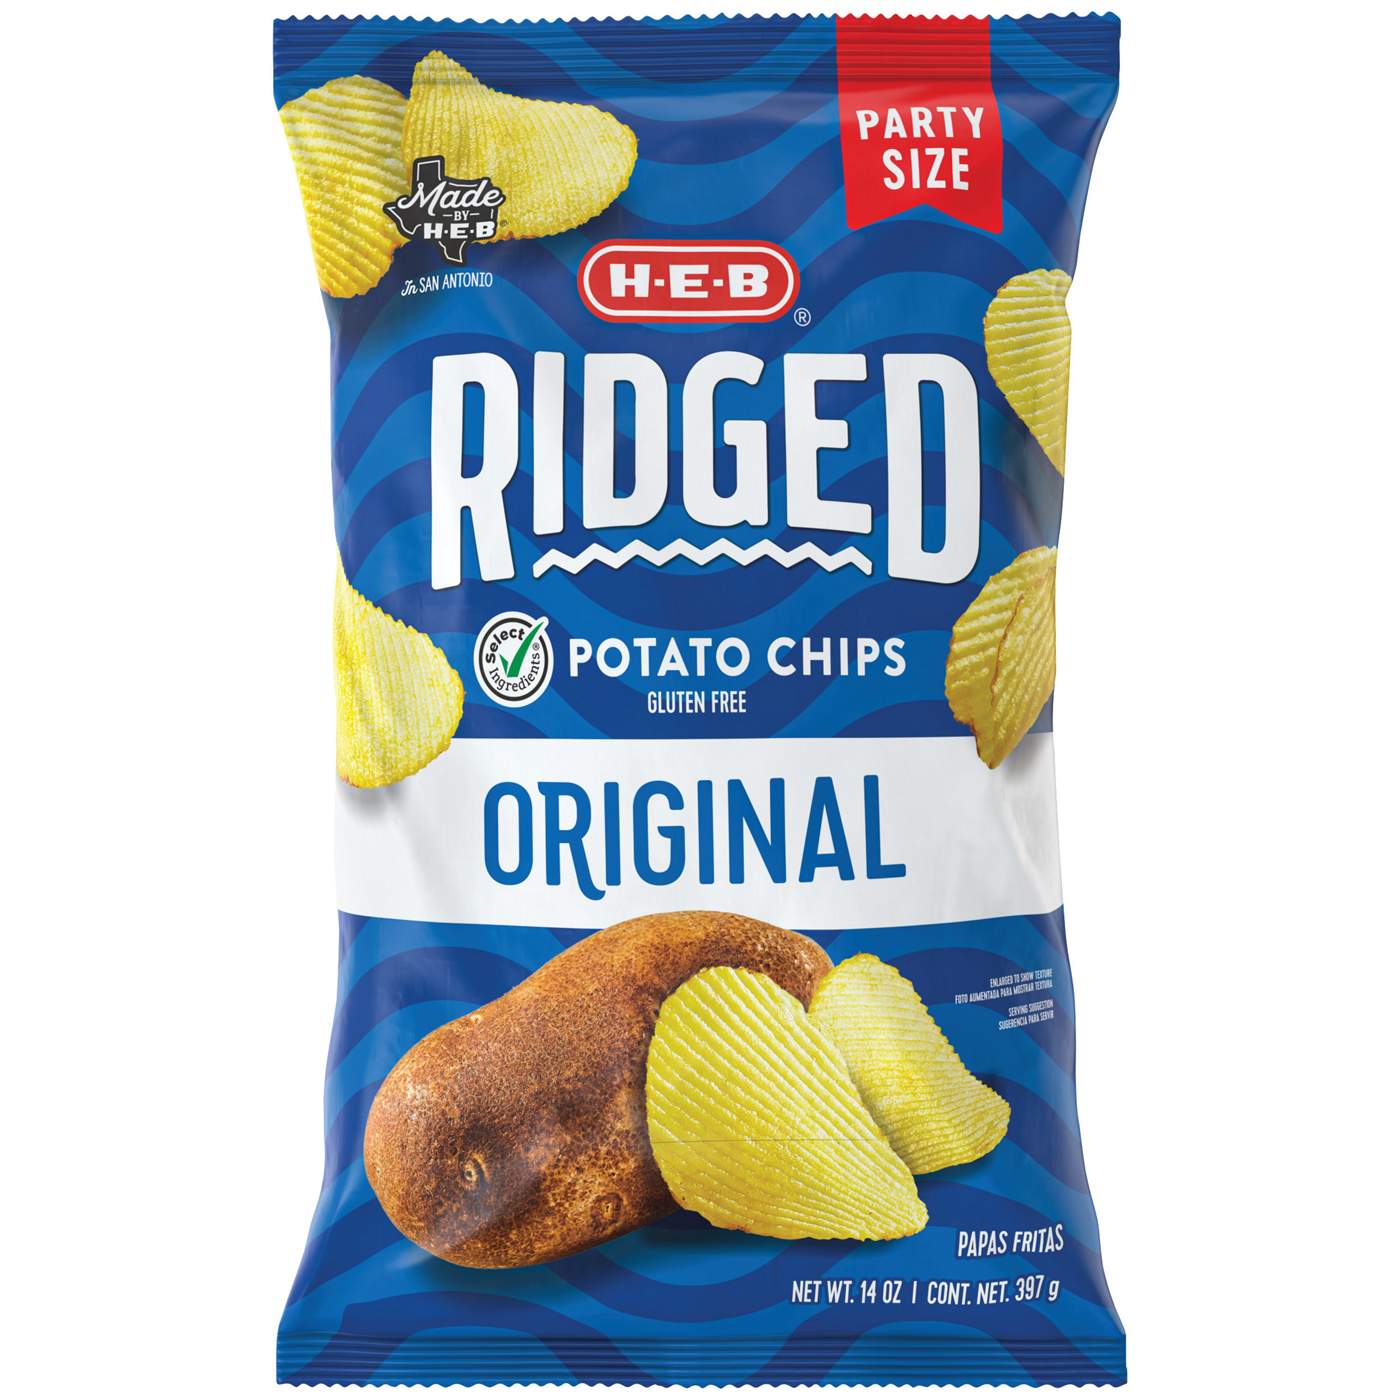 H-E-B Ridged Potato Chips – Original, Party Size; image 1 of 2